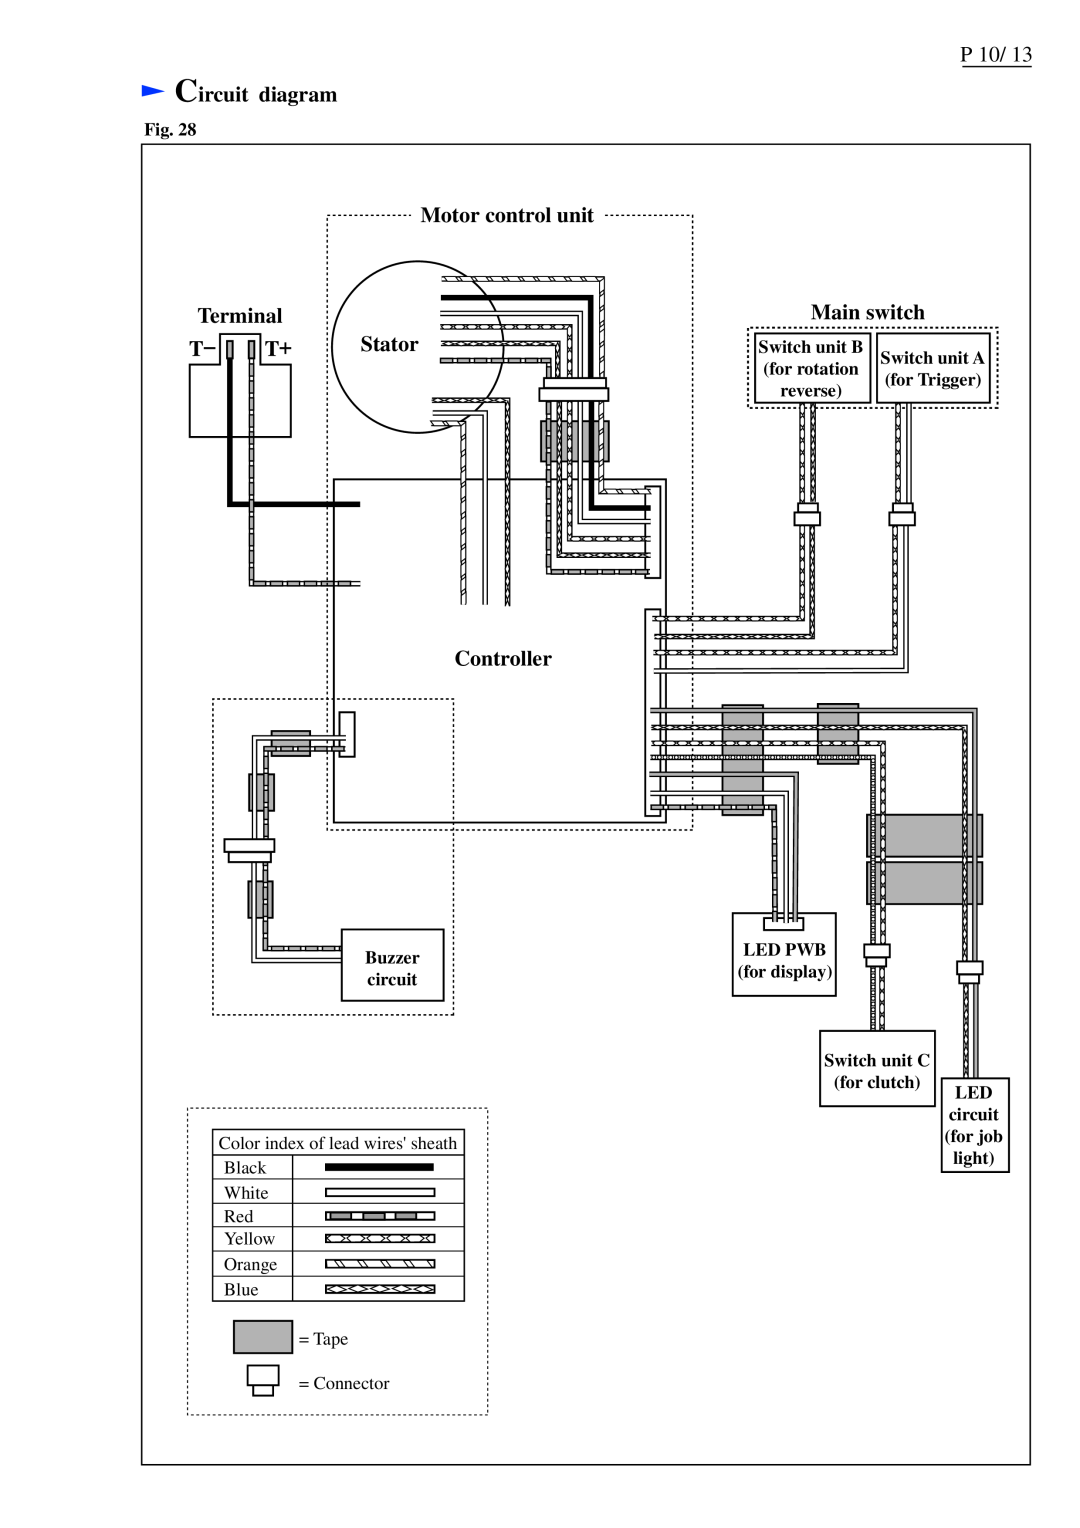 Makita BFL300F Circuit diagram, Motor control unit Terminal Stator, Main switch, Controller, reverse, for Trigger, light 